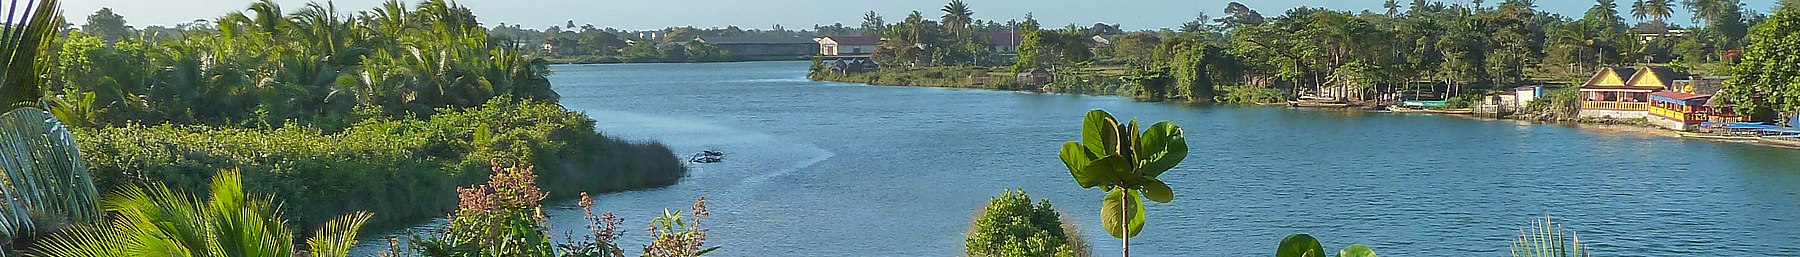 Manakara river (cropped).jpg